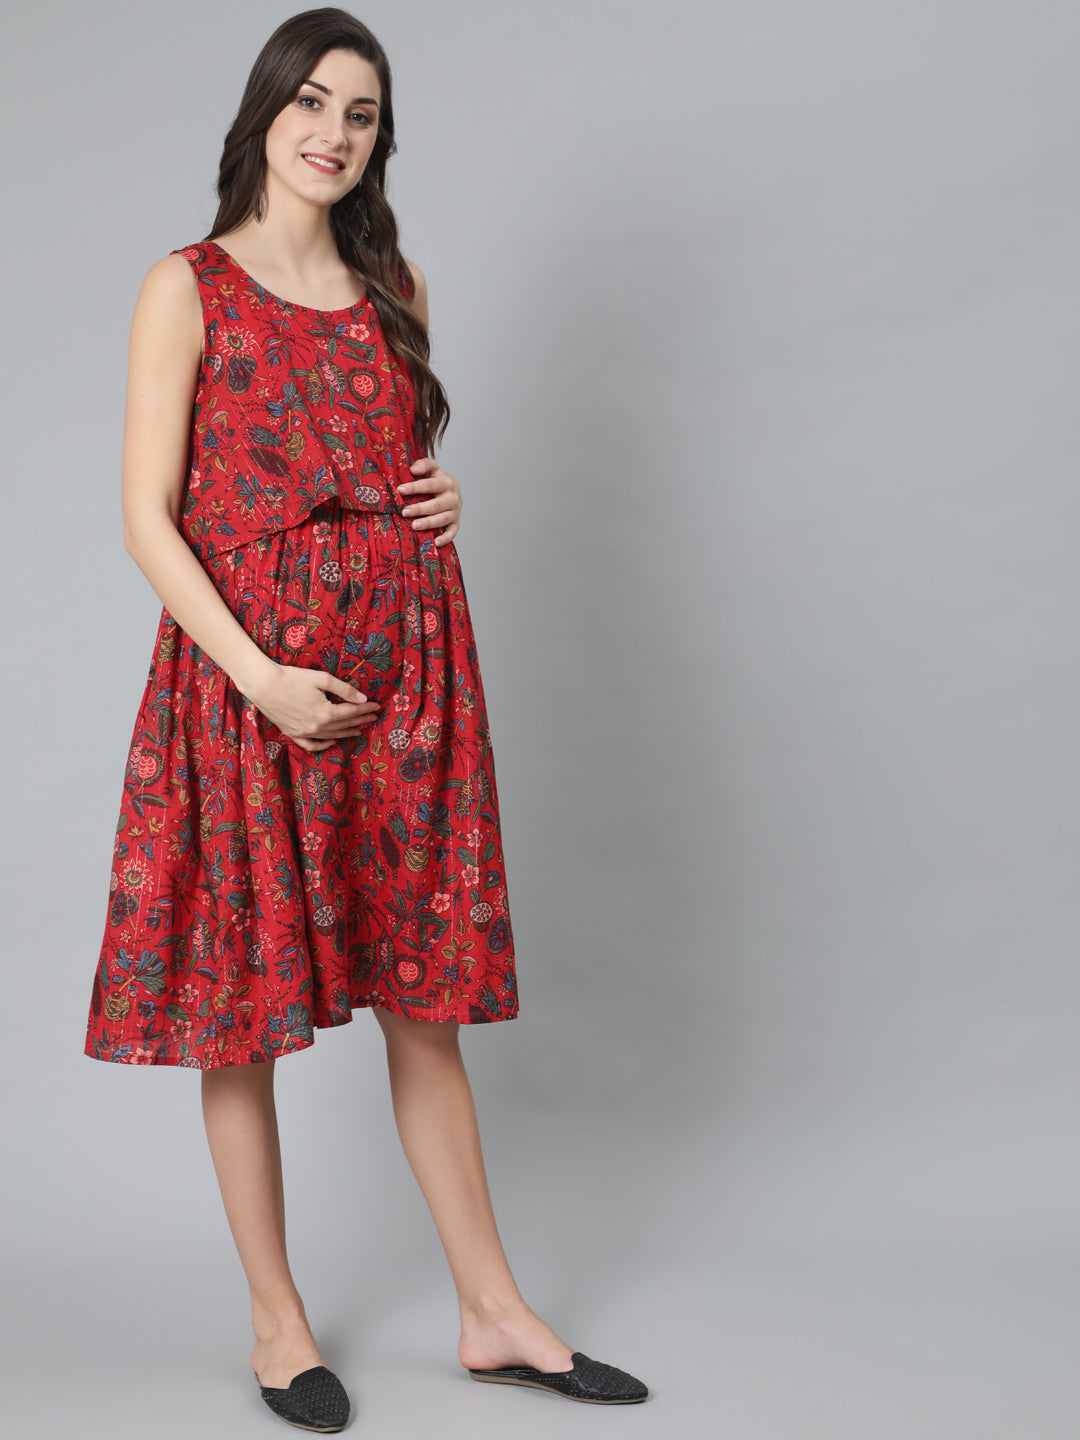 Women's Red Floral Print Dress - Aks